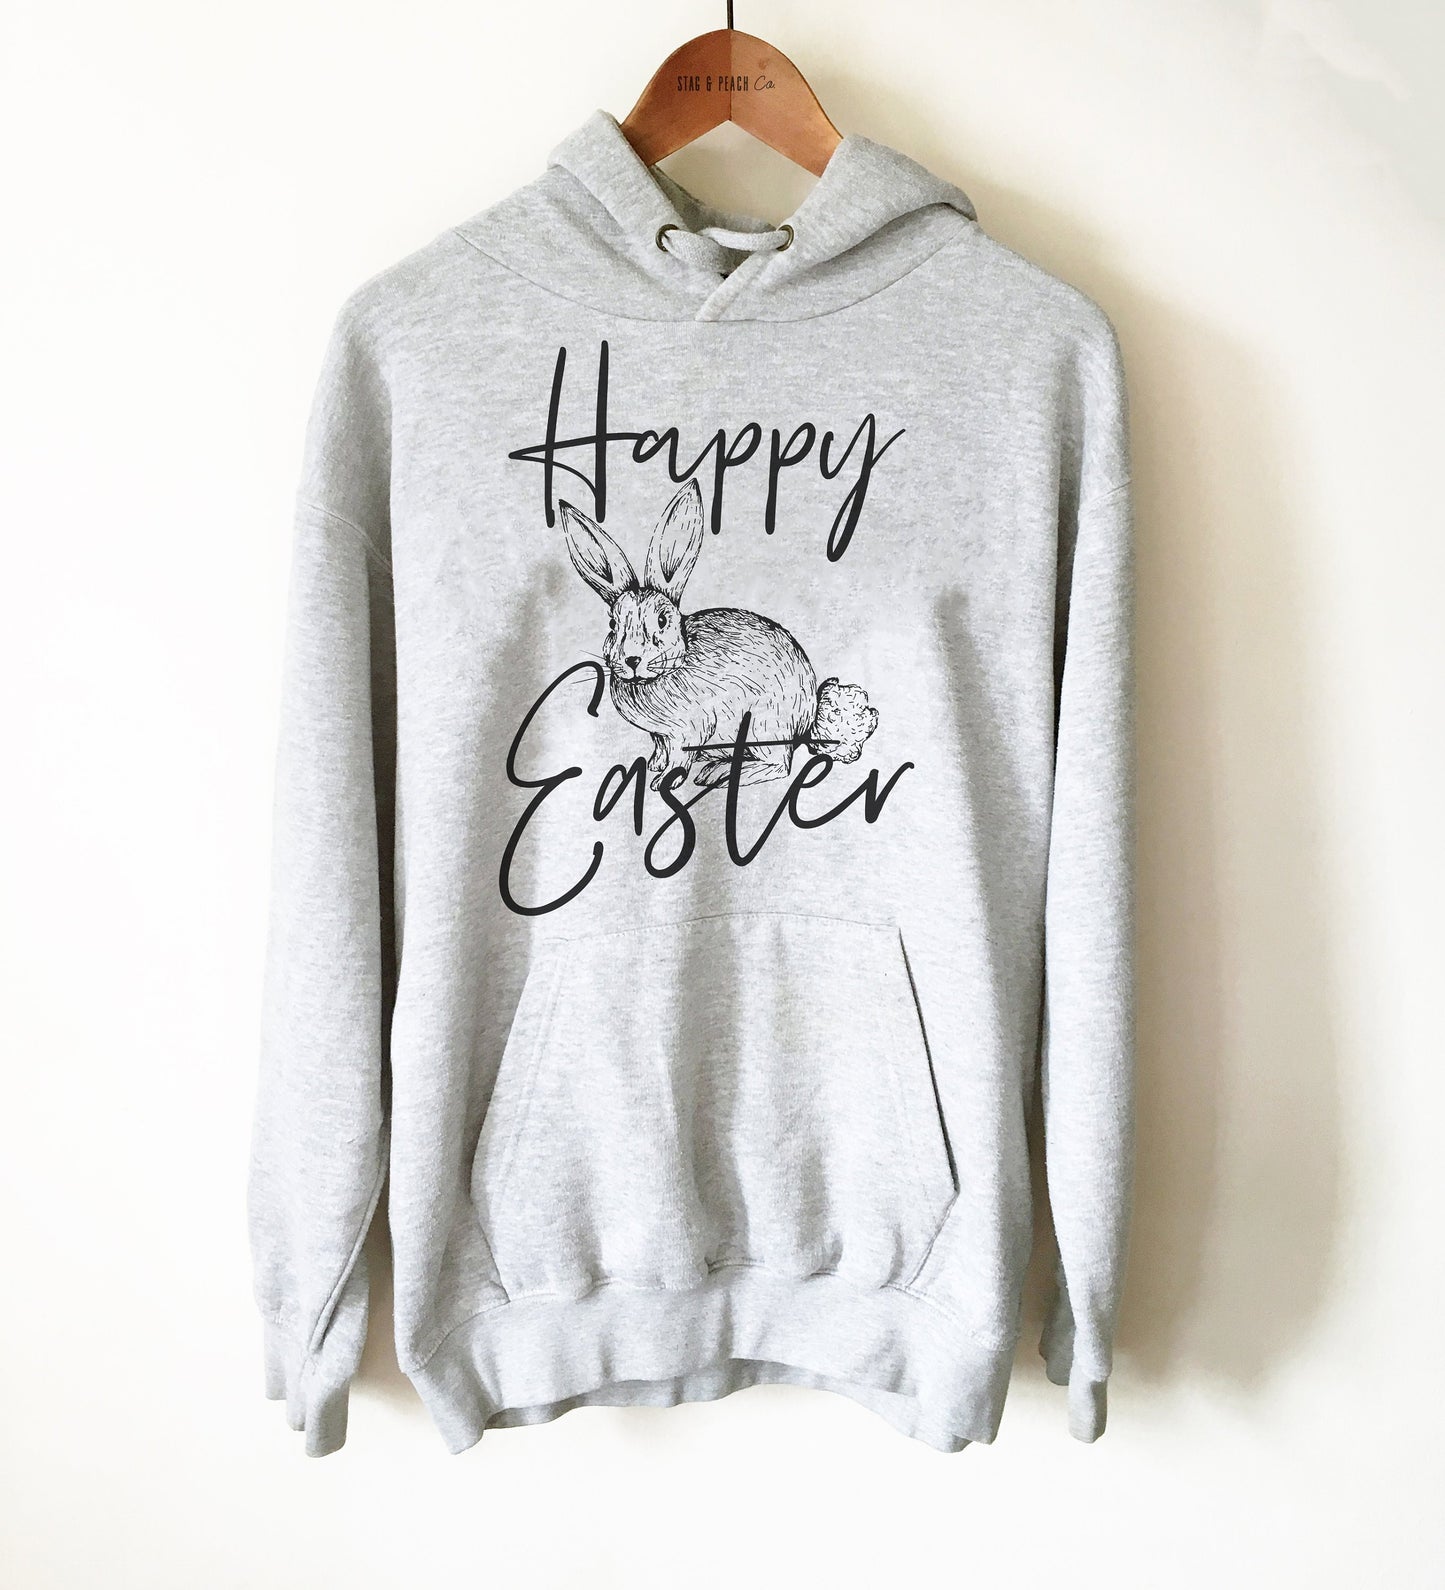 Happy Easter Unisex Hoodie - Bunny Lover Gift, Easter Outfit, Bunny Ears Shirt, Rabbit Lover Gift, Easter Basket Stuffer, Easter Gift Idea